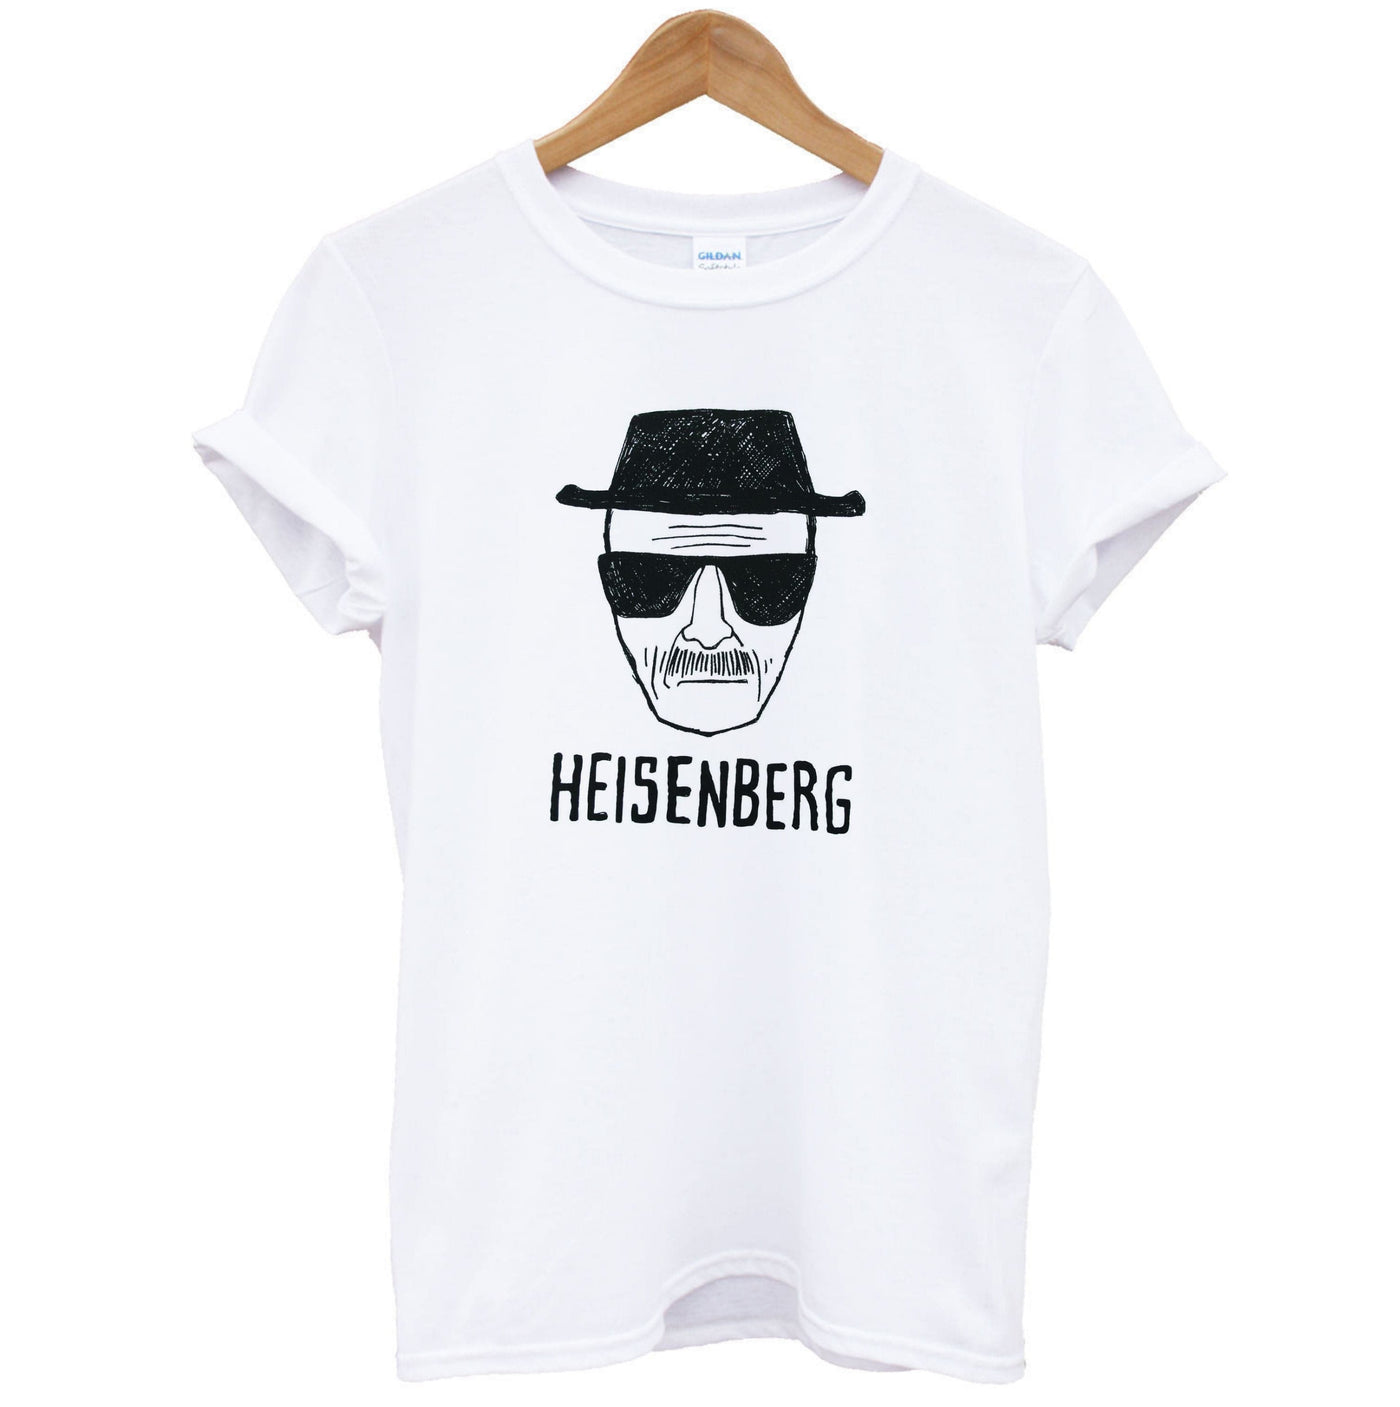 Heisenberg - Breaking Bad T-Shirt